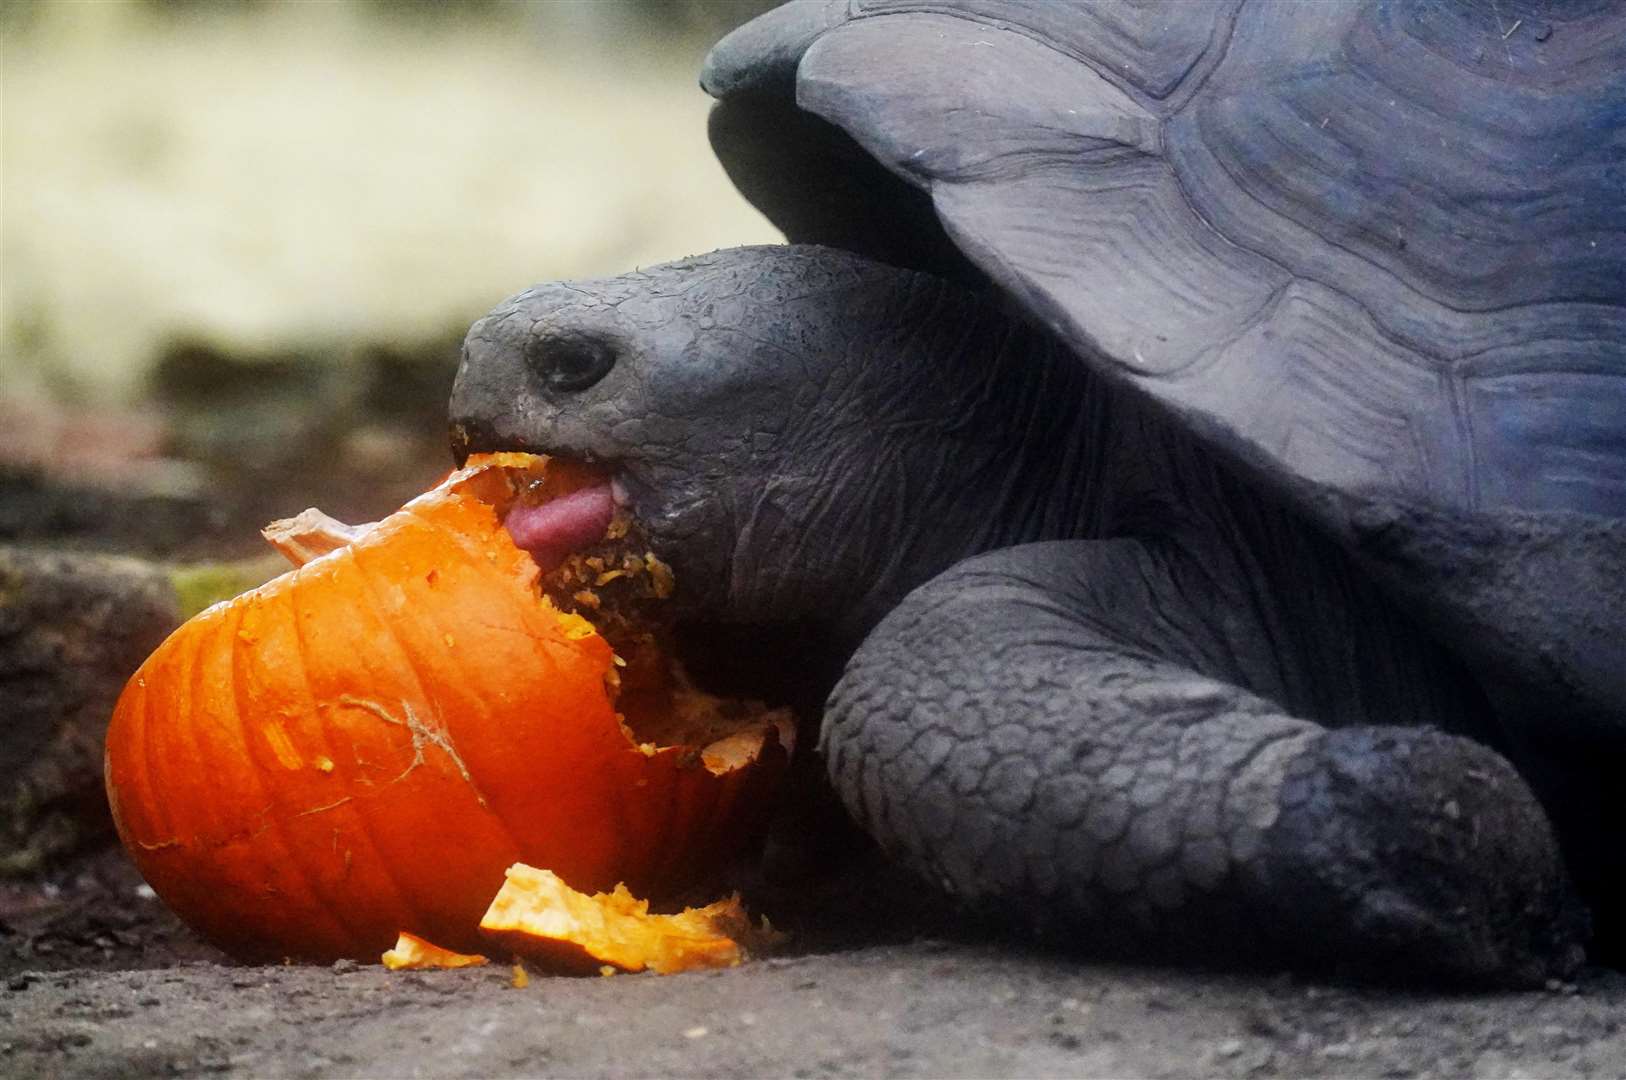 A Galapagos tortoise demolishes one of the pumpkins (Jonathan Brady/PA)